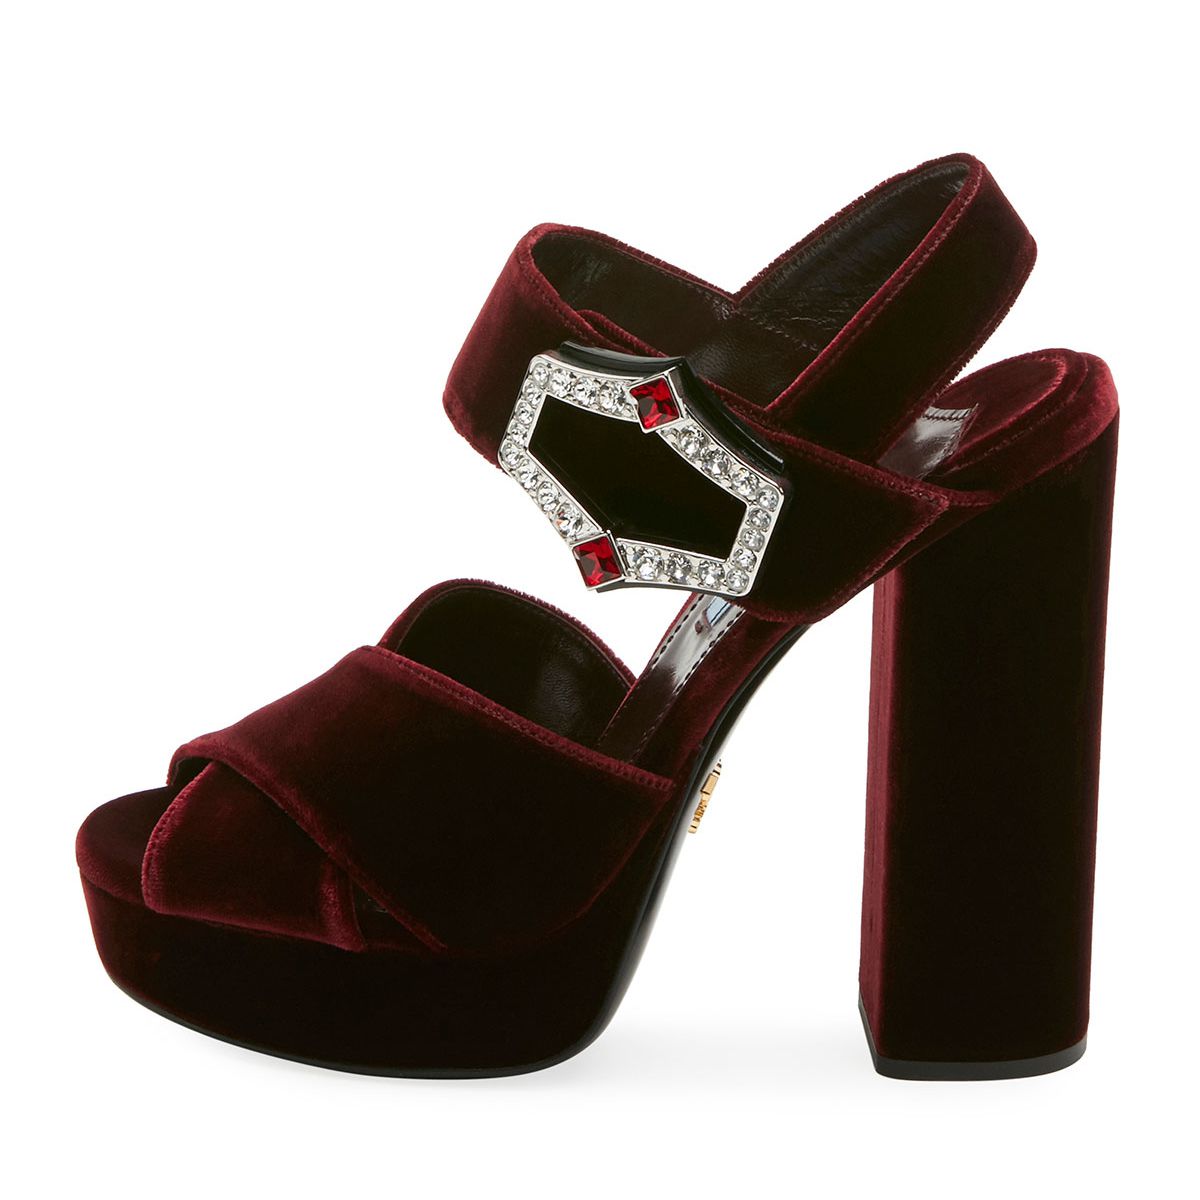 Prada Jeweled Velvet Block-Heel Sandal, $990